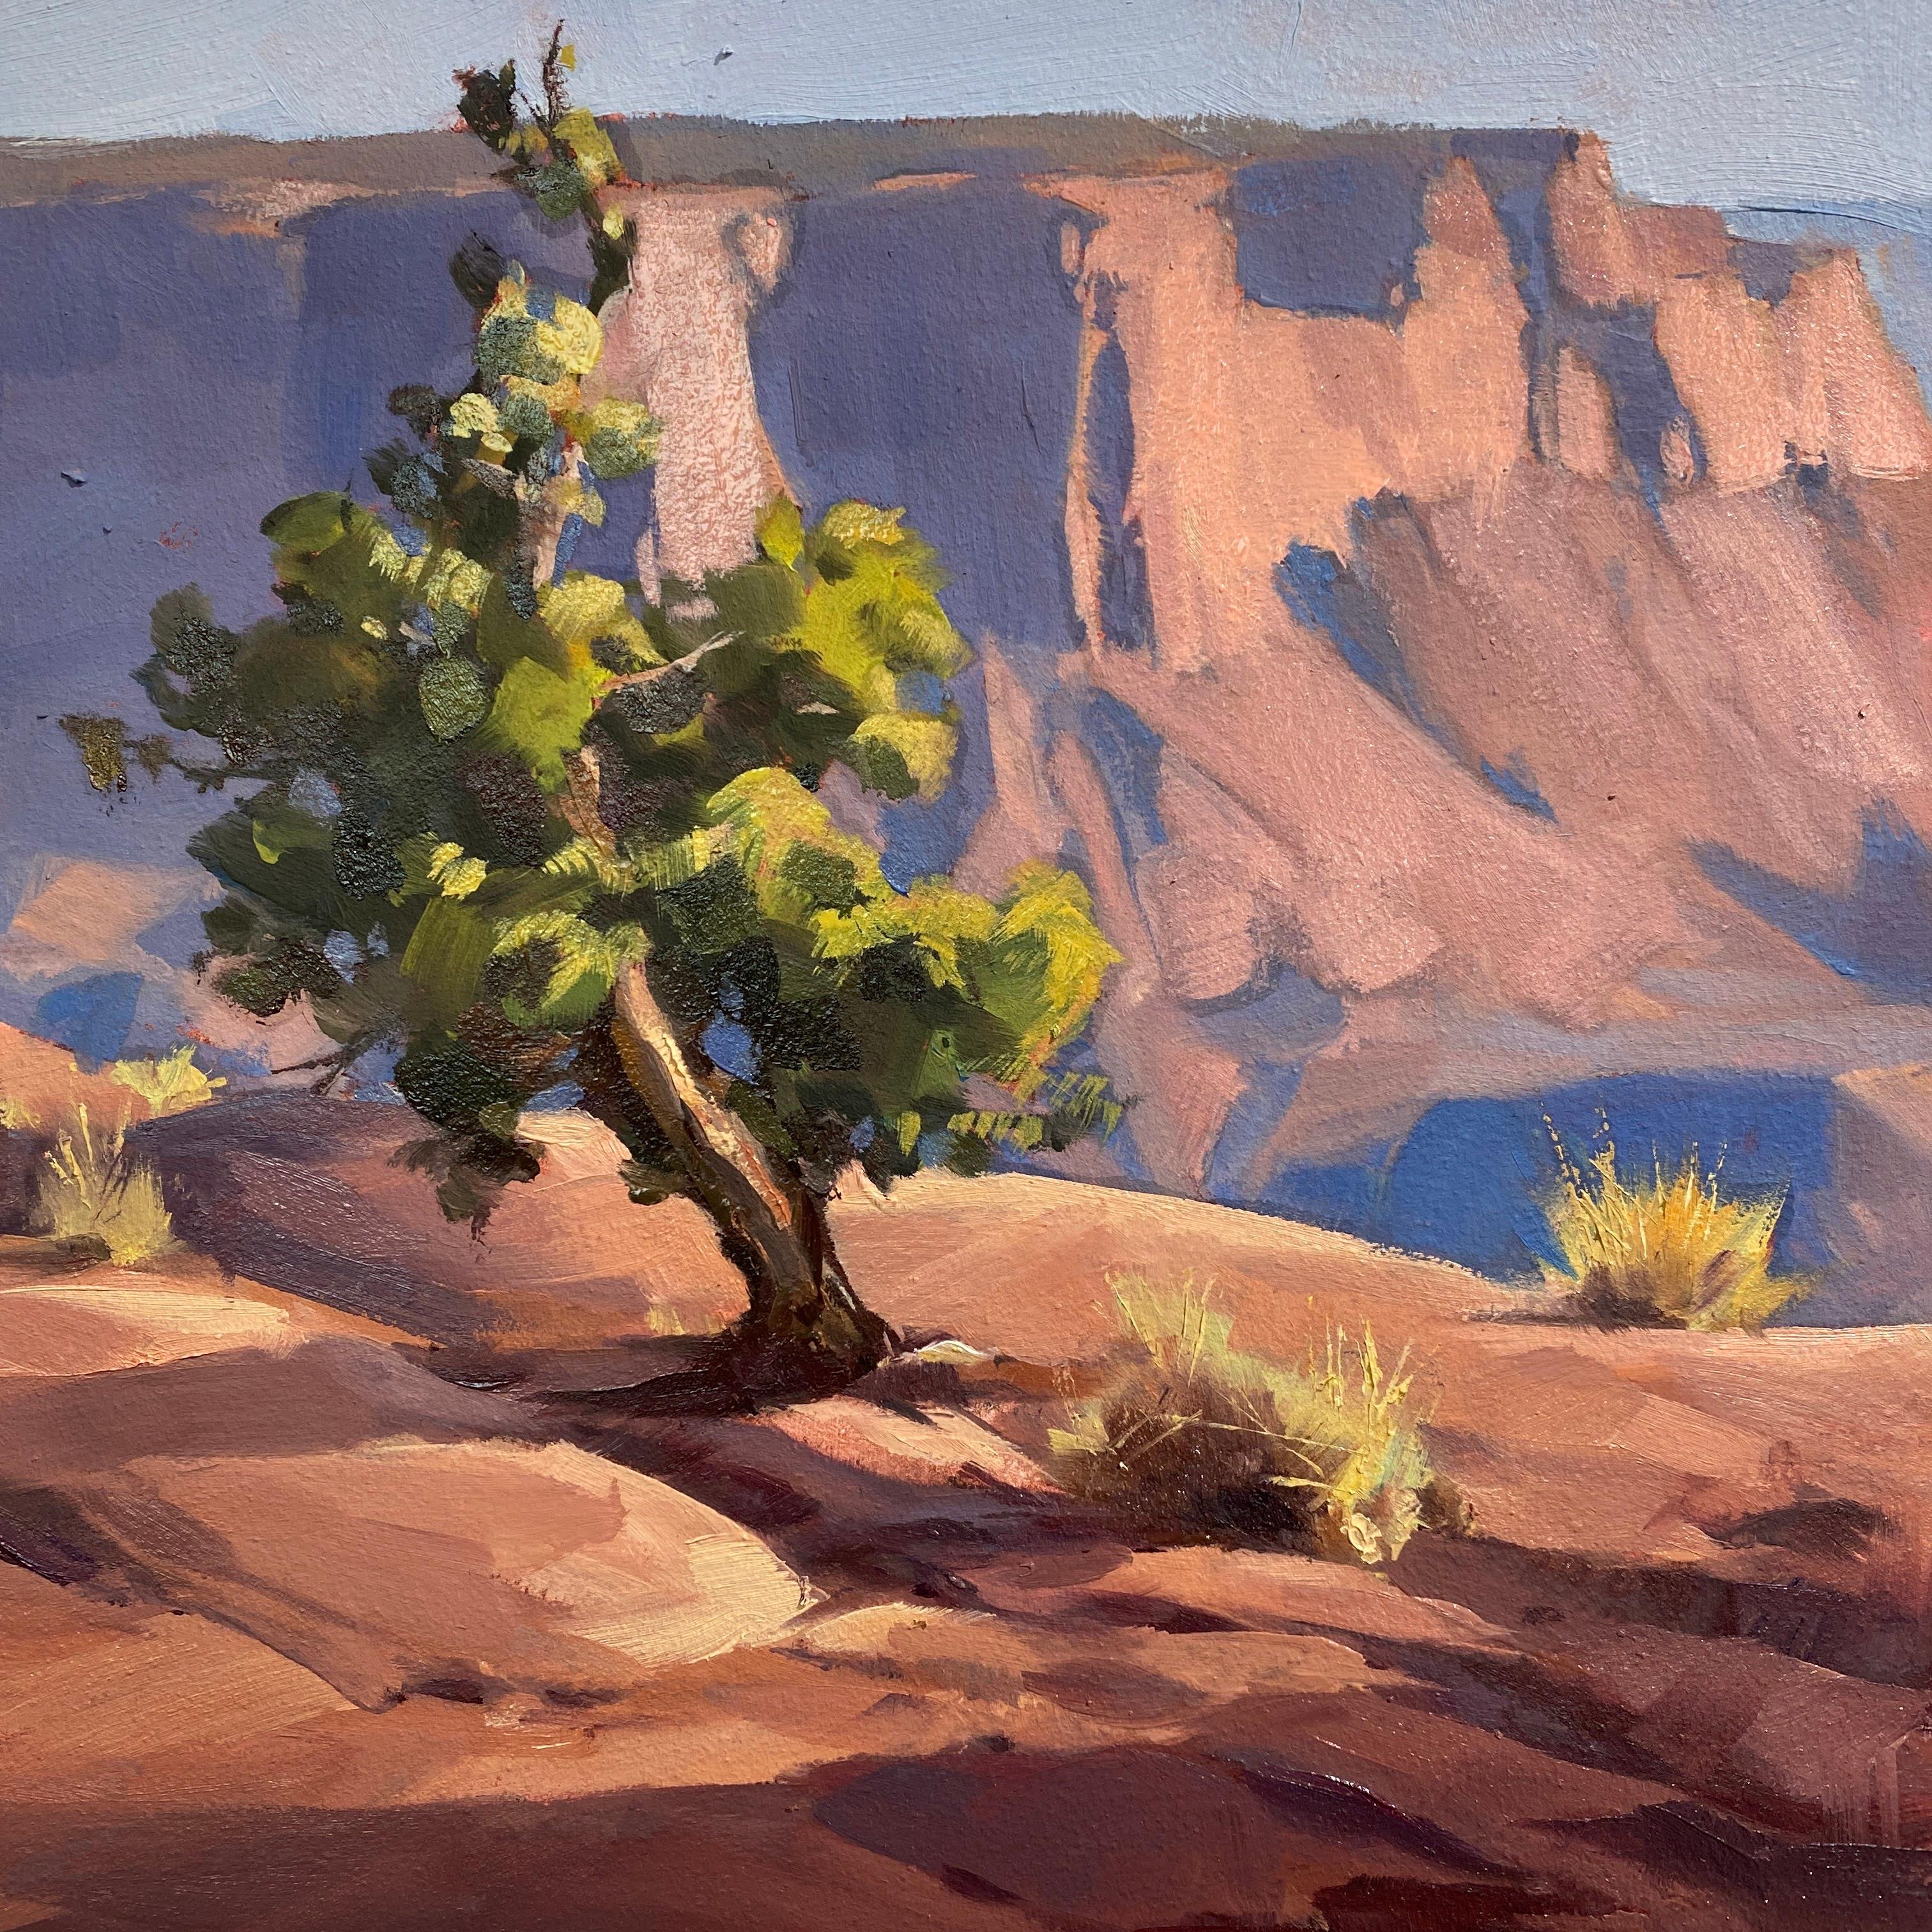 Judd Mercer Landscape Painting - "Living on the Edge" Oil Painting